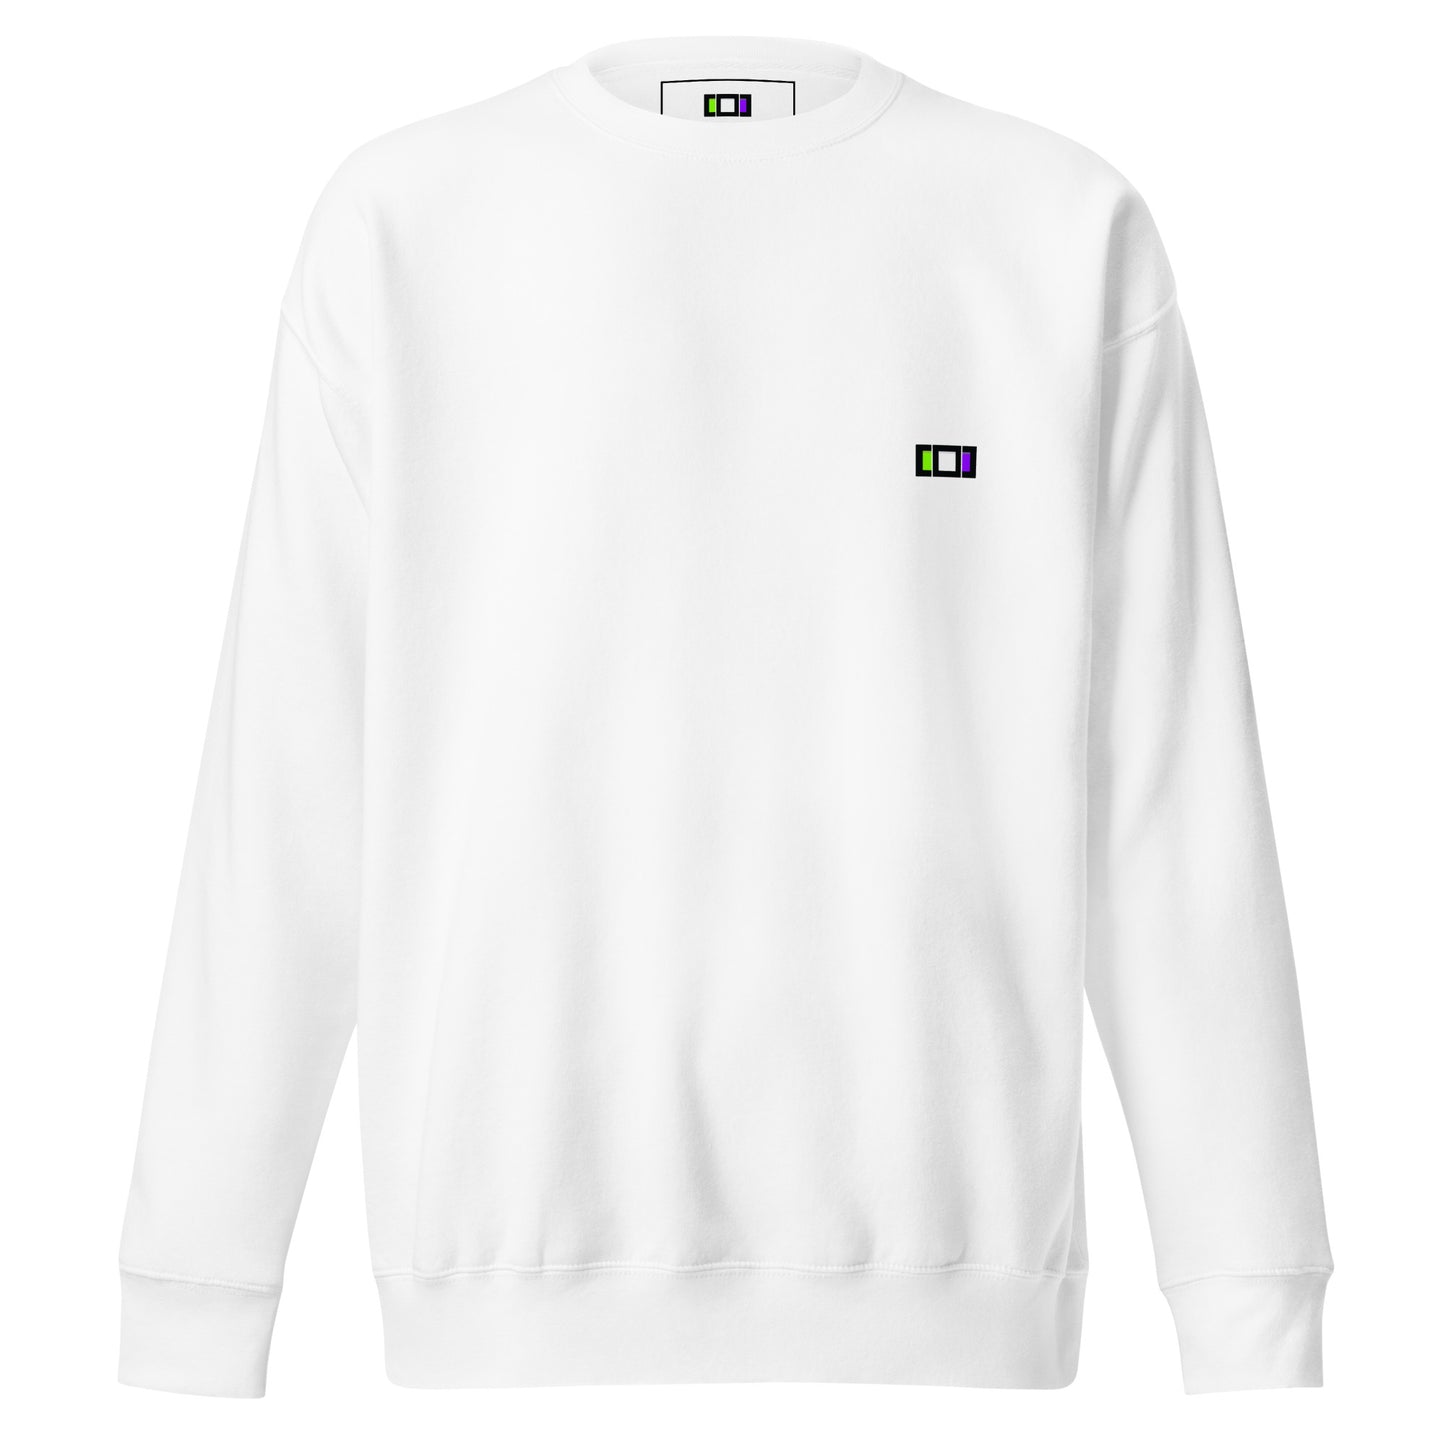 VibePill - 001 Sweatshirt